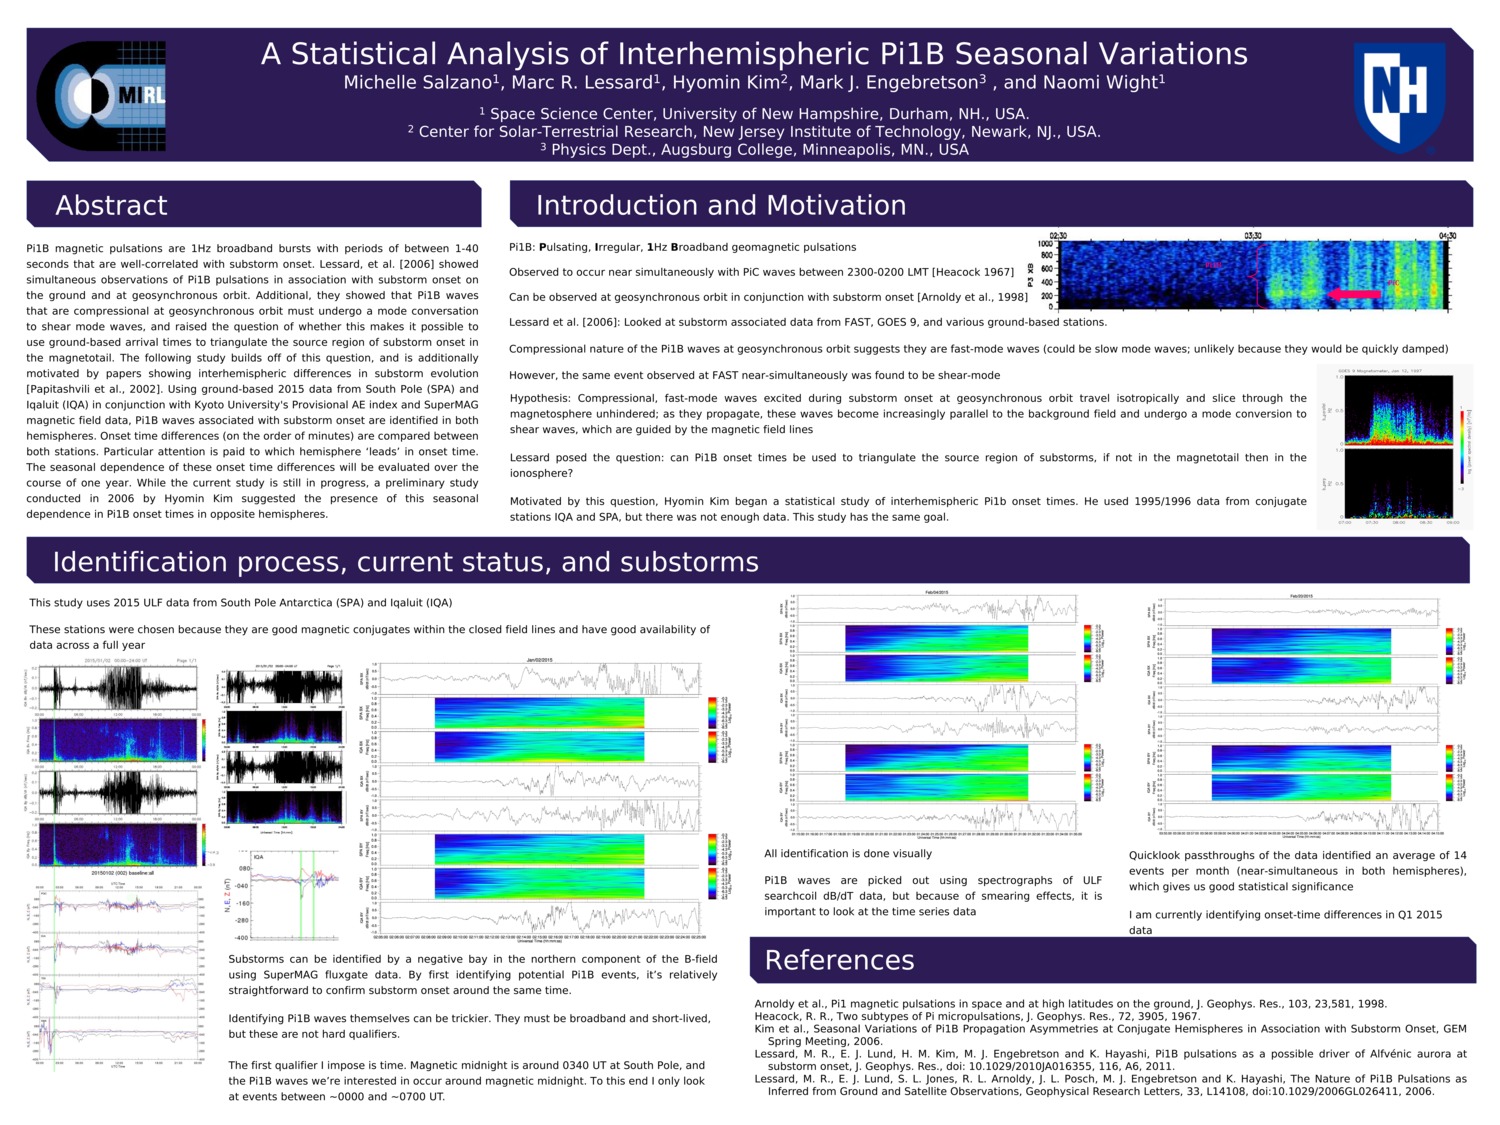 Pi1b Interhemispheric Seasonal Variations by mls1045